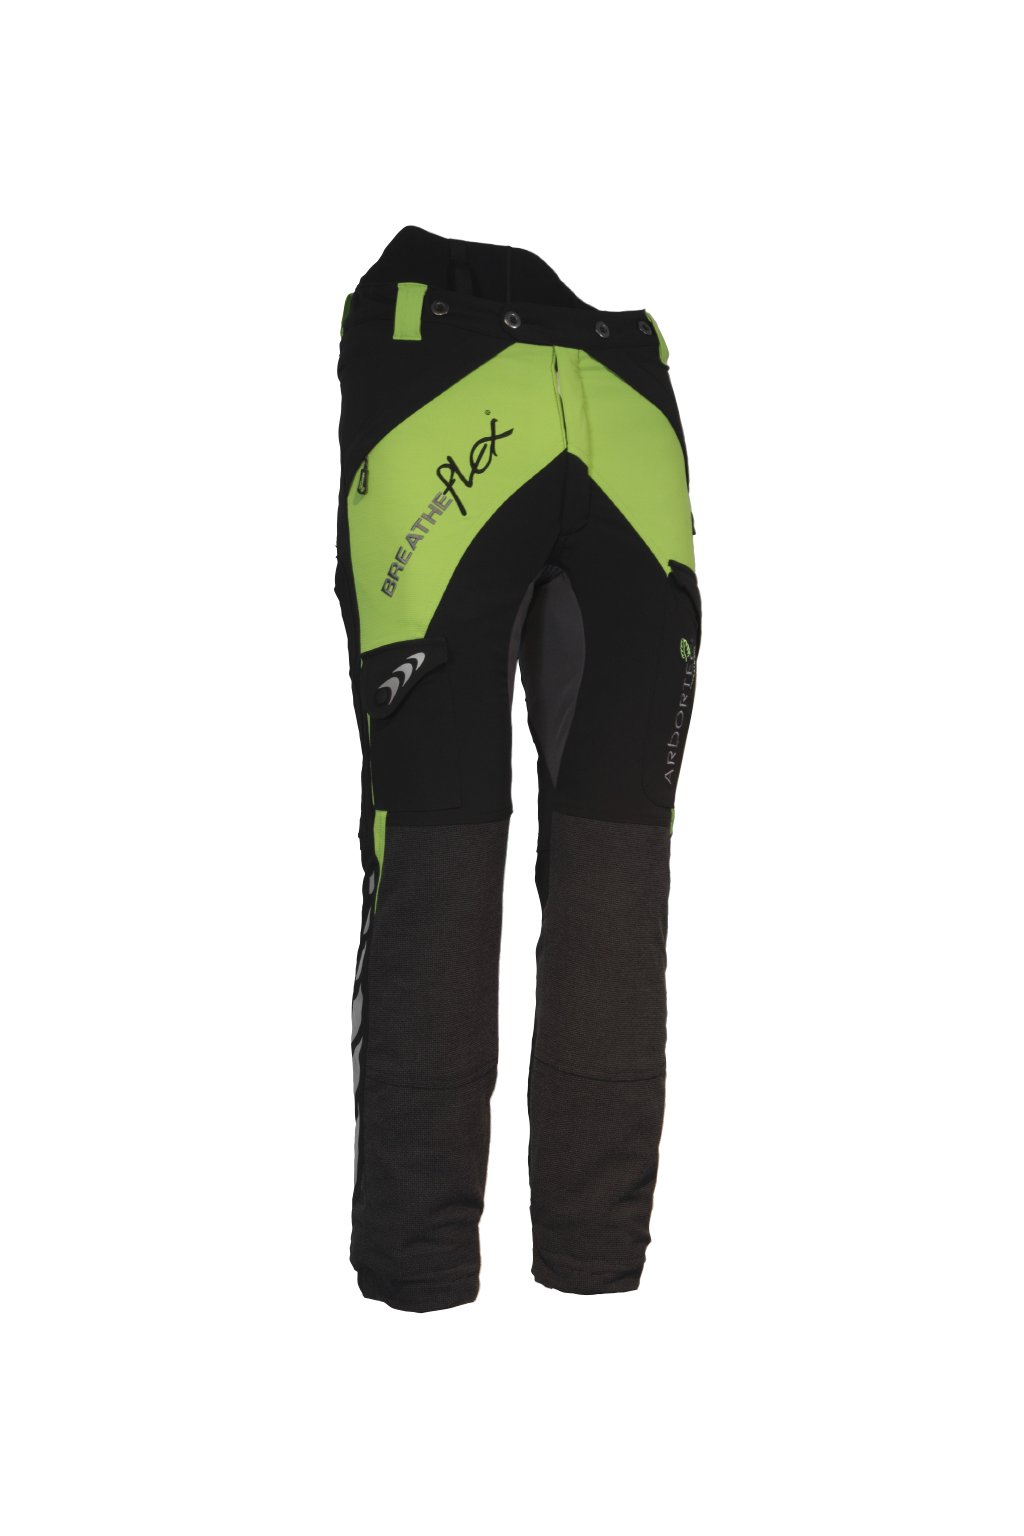 Protipořezové kalhoty Breatheflex zelené Class2/TypeC Reg